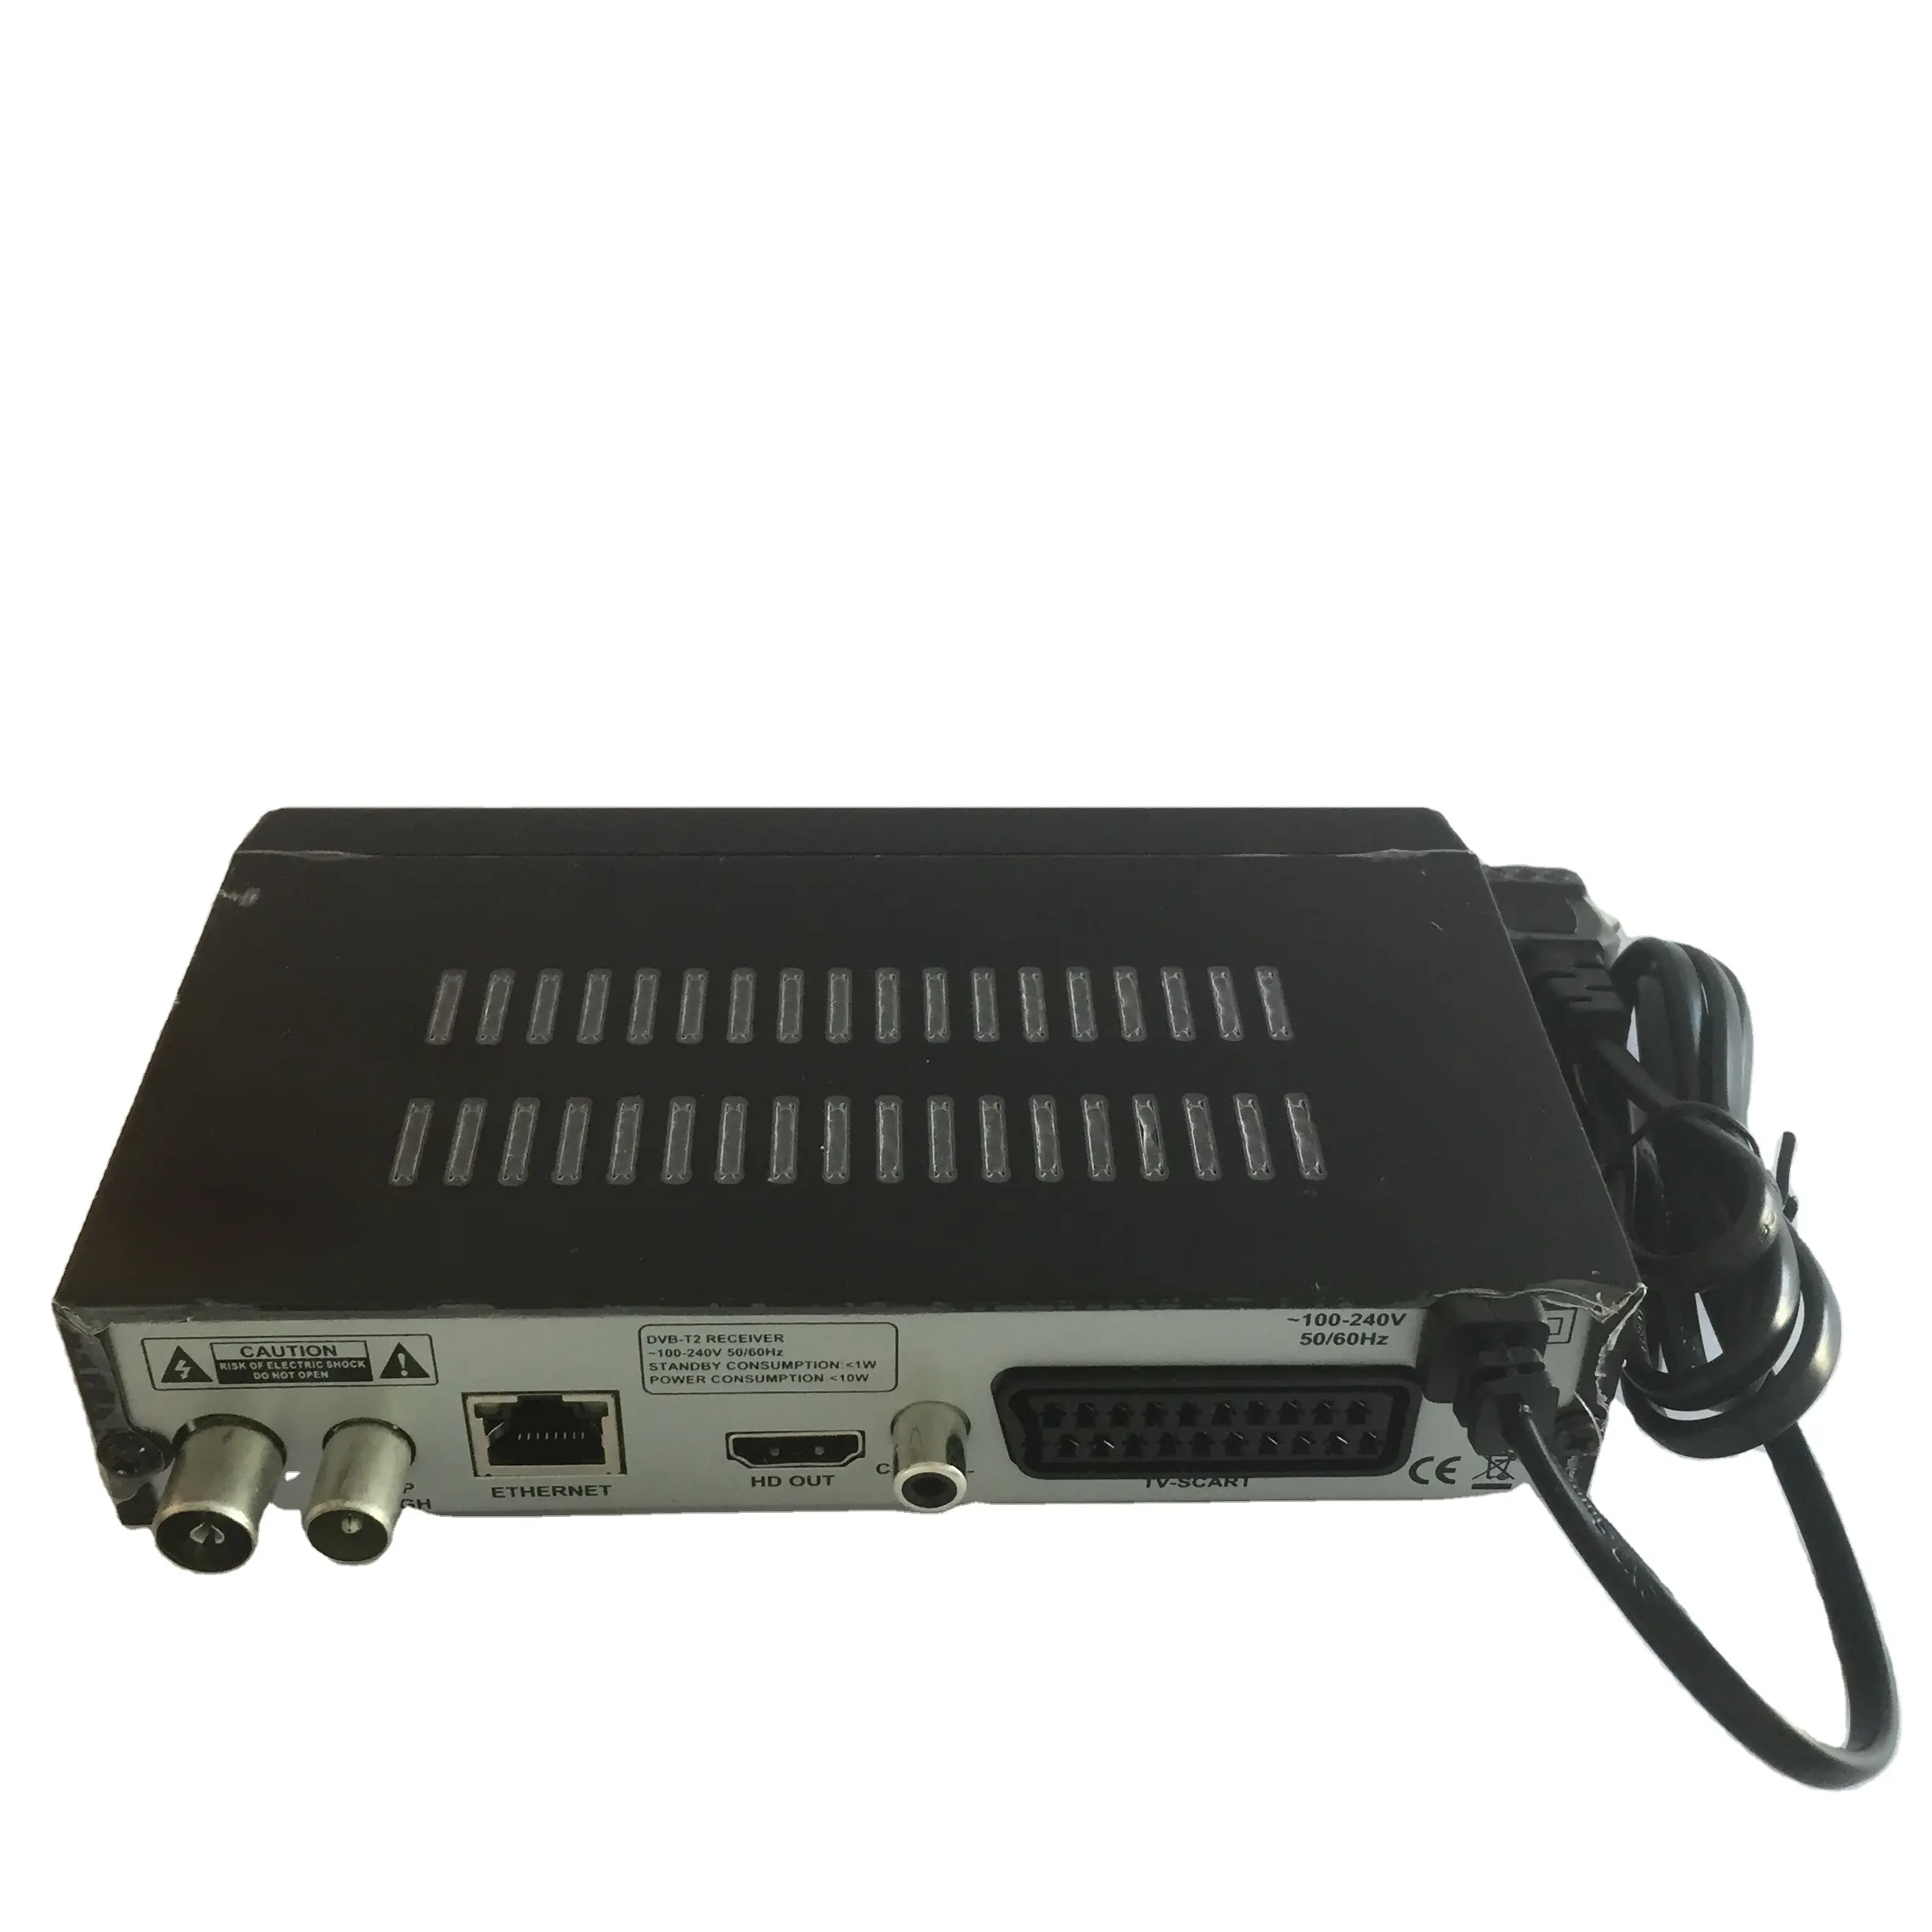 Sintonizador de tv DVB T2, alta definición, alta calidad, actualización de Firmware, DVB-T2